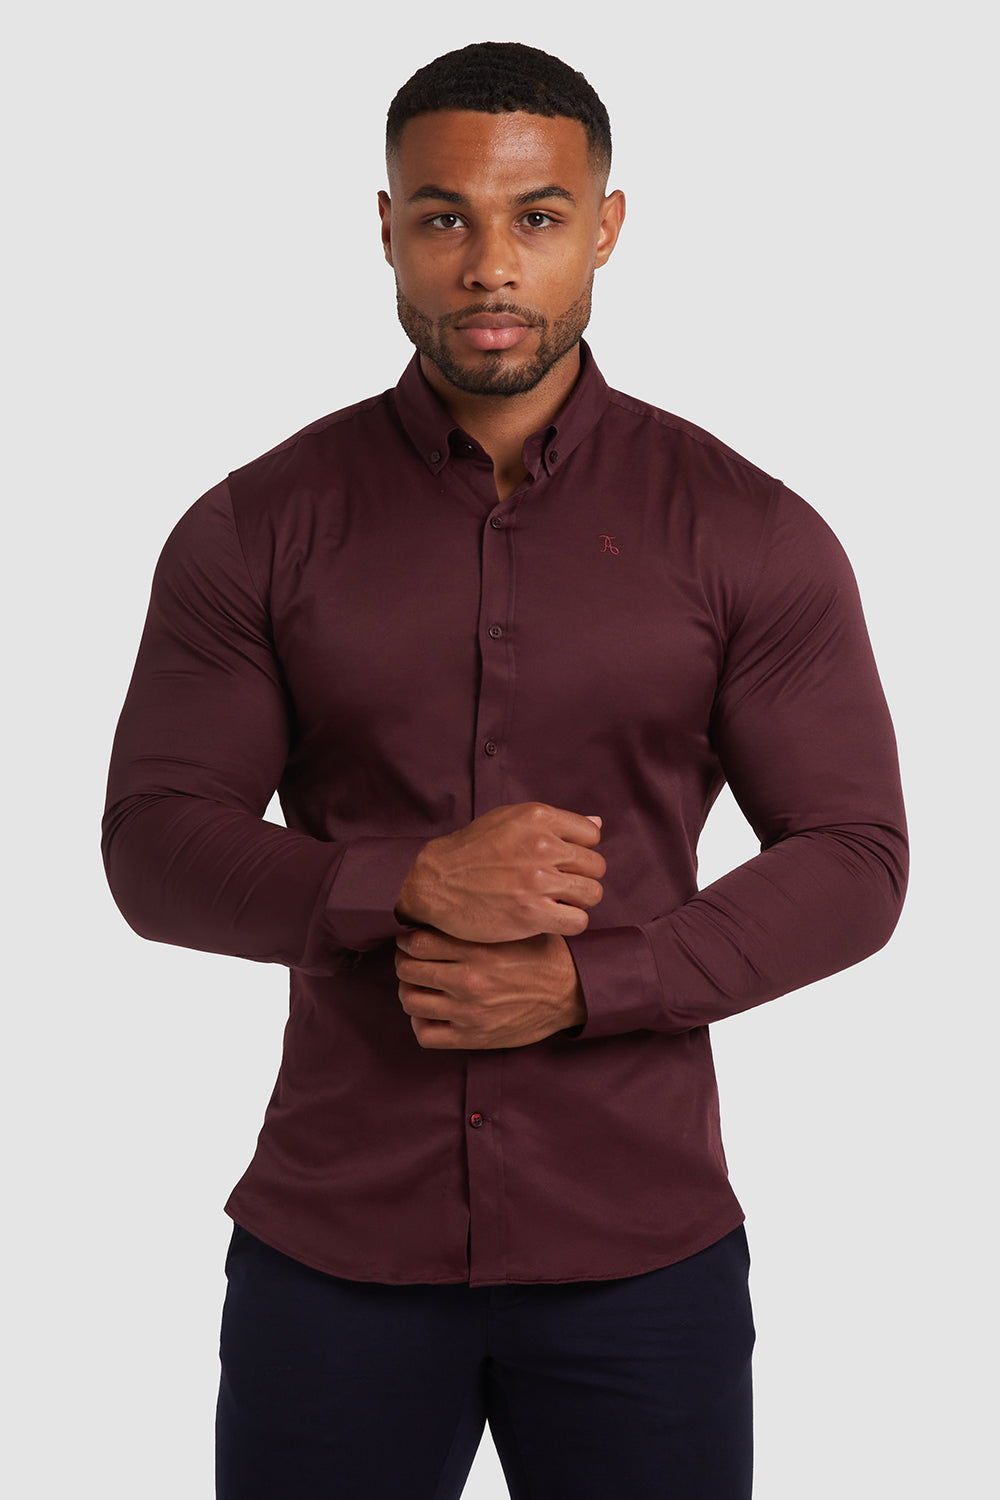 Comfortable Dress Shirts for Muscular Guys